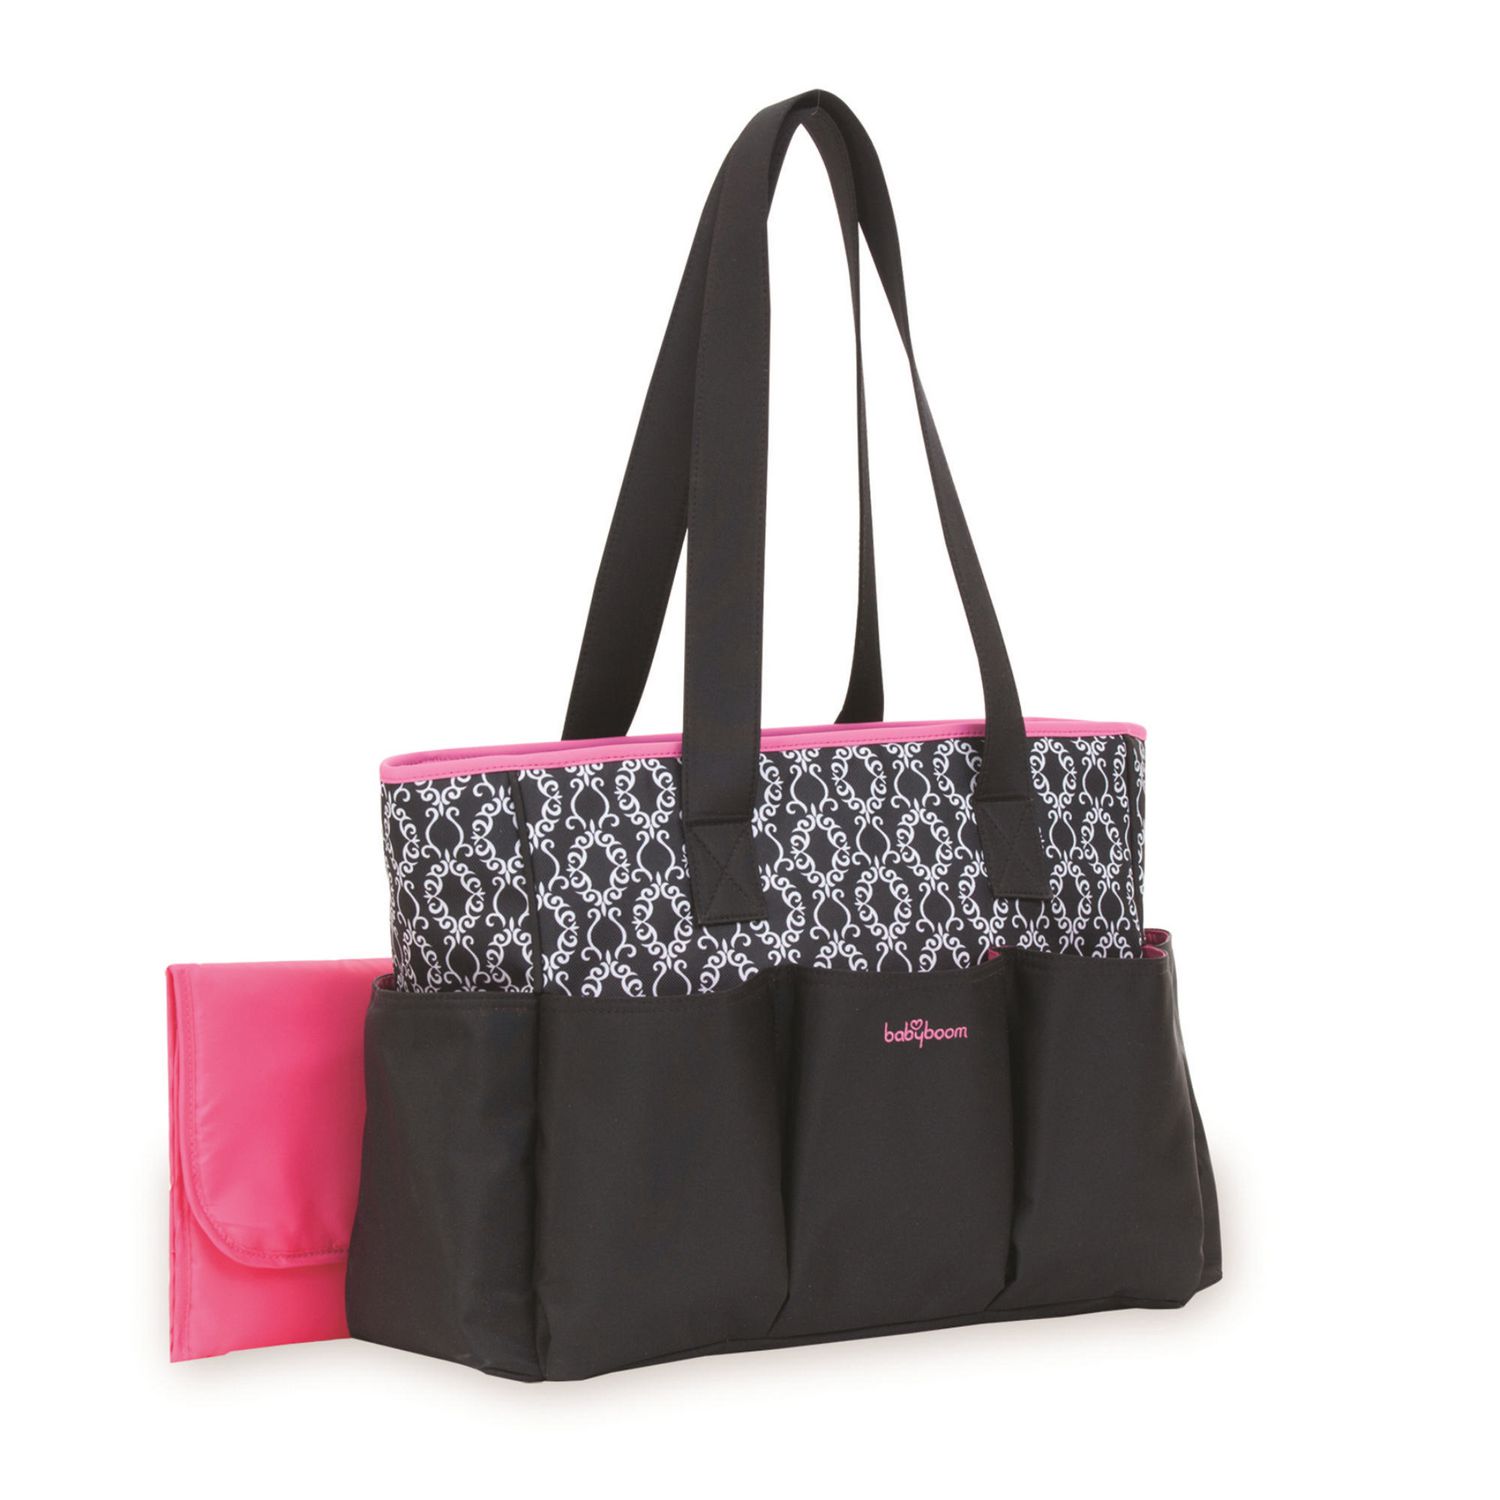 Baby Boom Tote Black with Pink Trim Diaper Bag | Walmart Canada